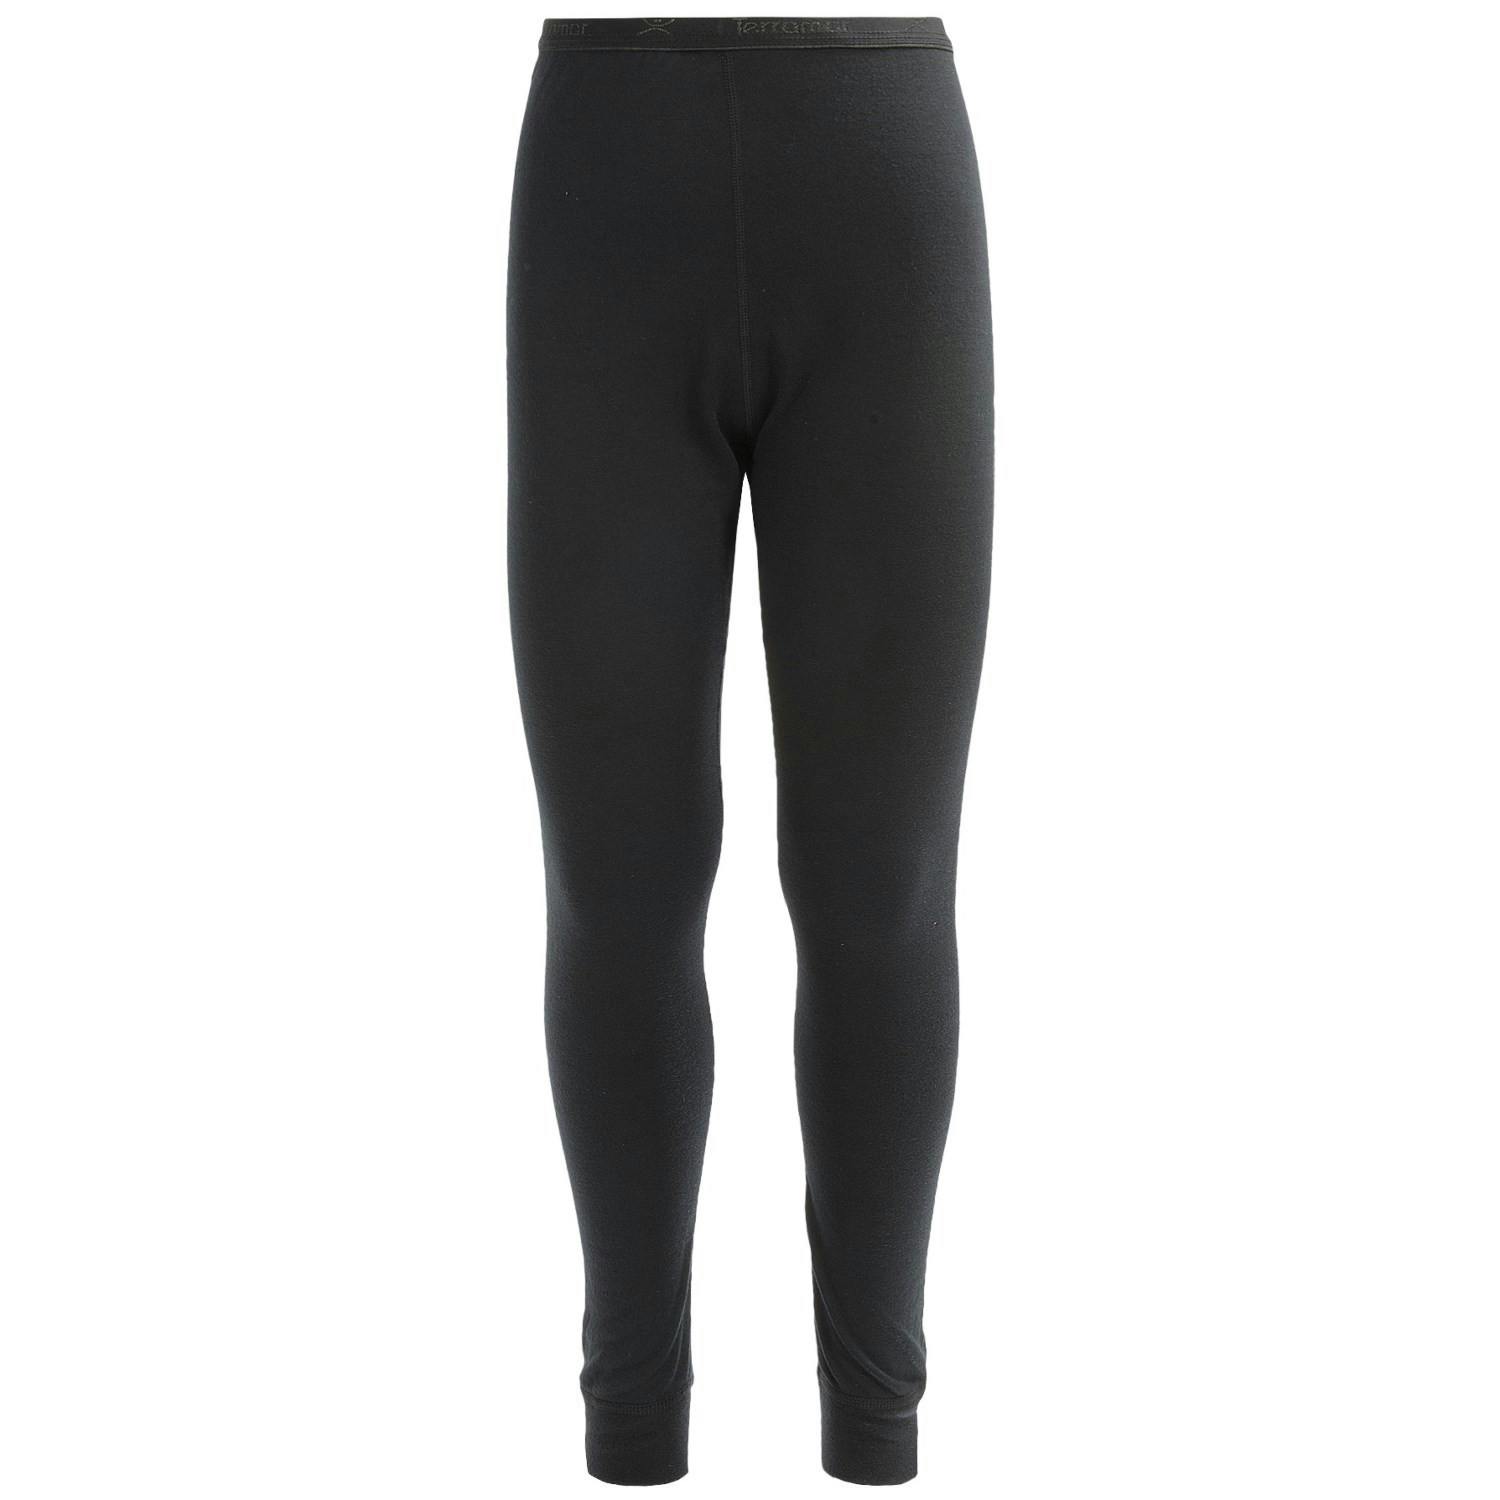 Terramar - Women's 2 Layer Thermal Pants 2.0 - LARGE - Black